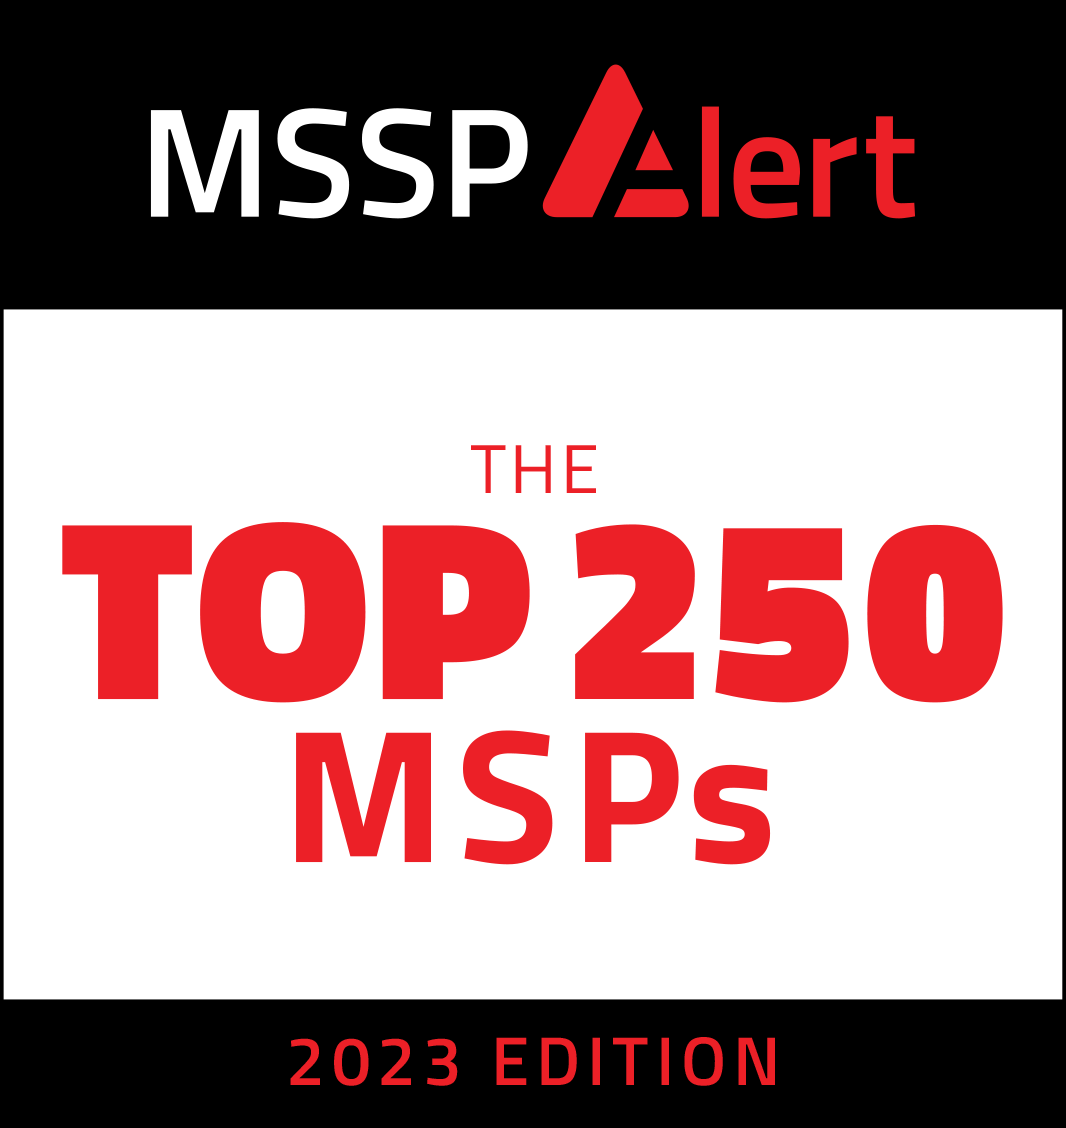 MSSP Alert 2023 logo